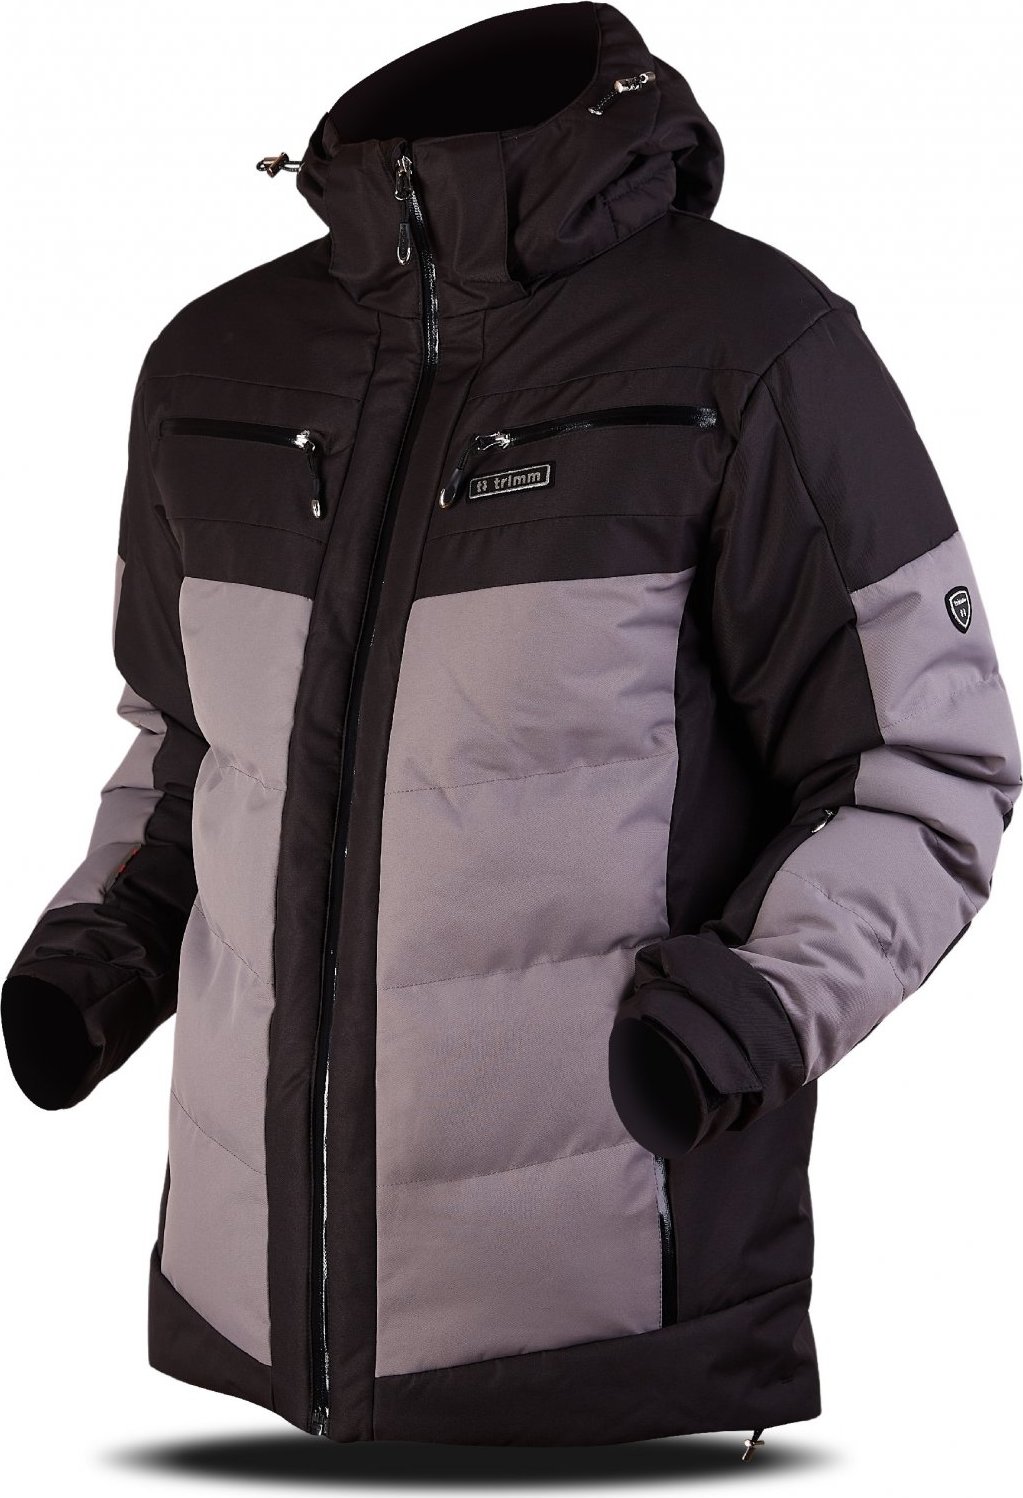 Pánská lyžařská bunda TRIMM Vario šedá/černá Velikost: L, Barva: grey/ black